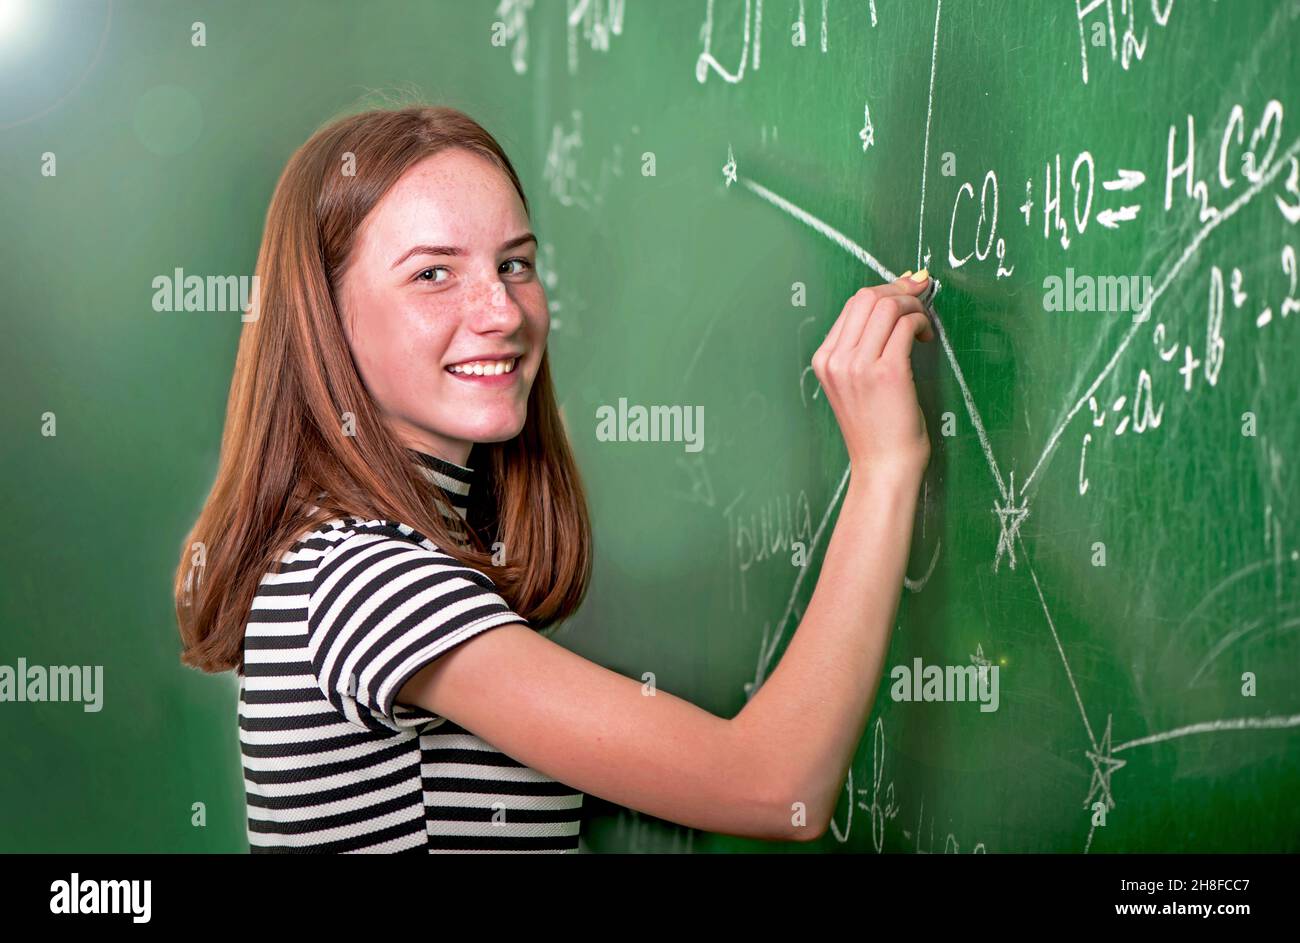 Prepare 3 teachers. Девушка математик. Clean the blackboard. Фото девочка стоит возле доски в школе и что то понял.